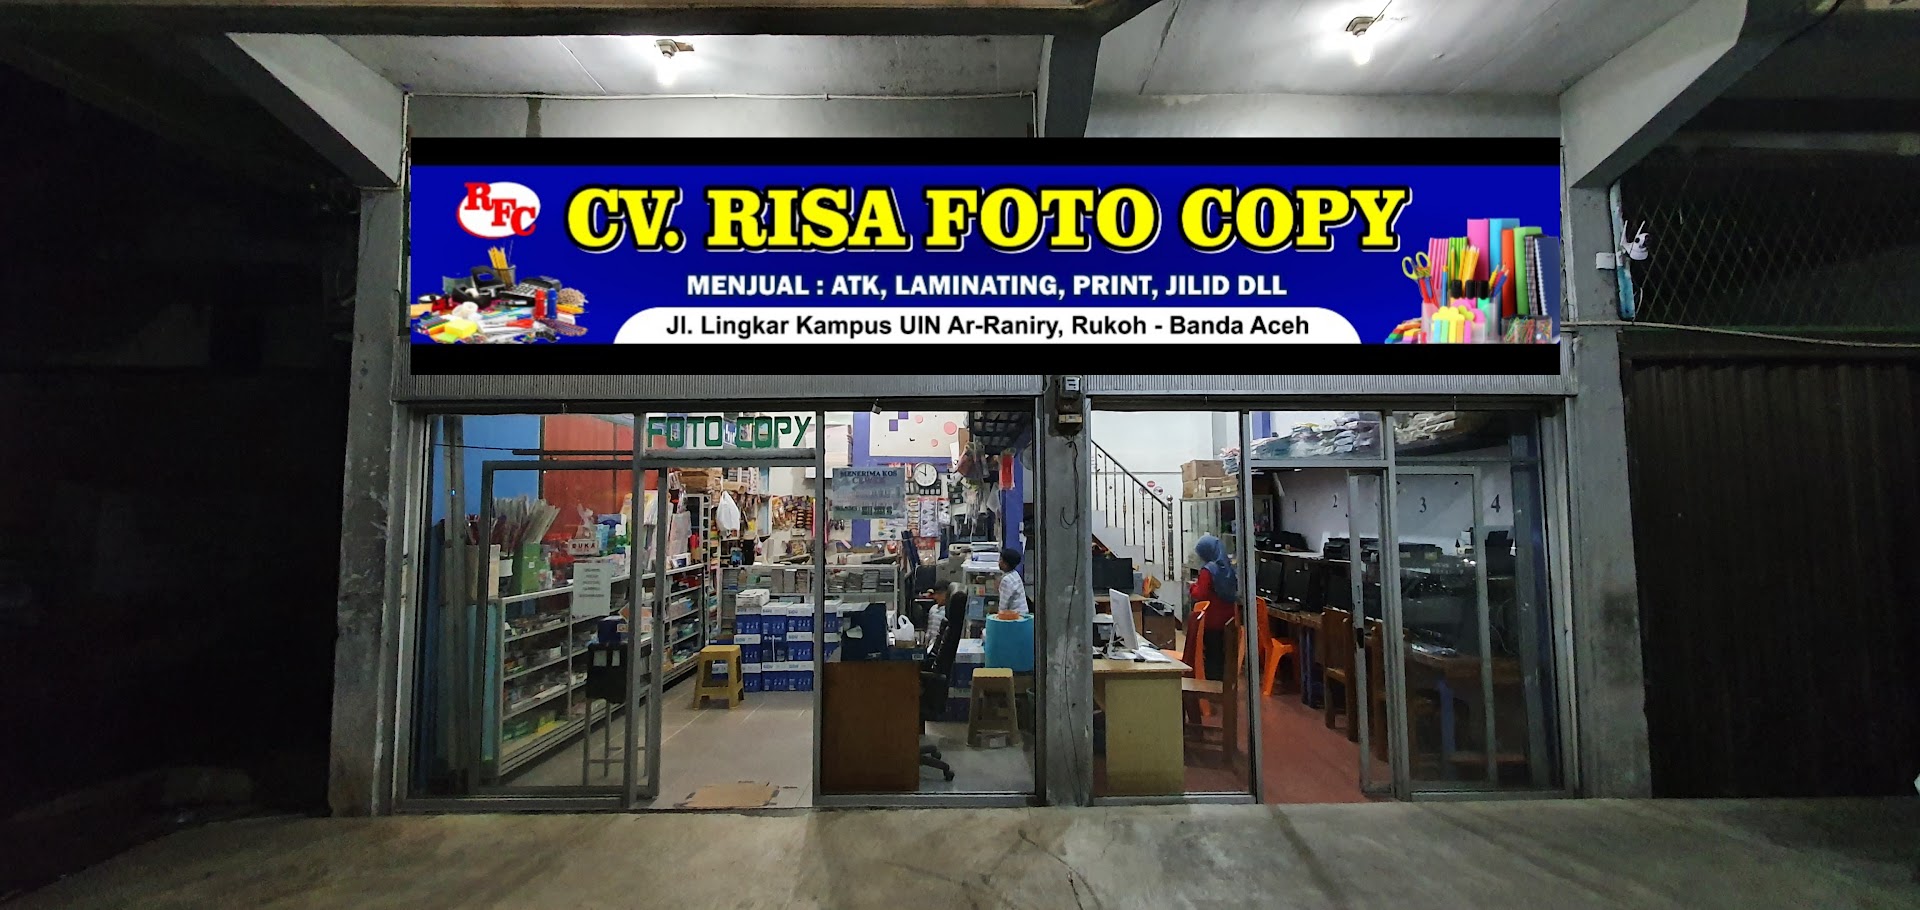 Cv. Risa Fotocopy Photo